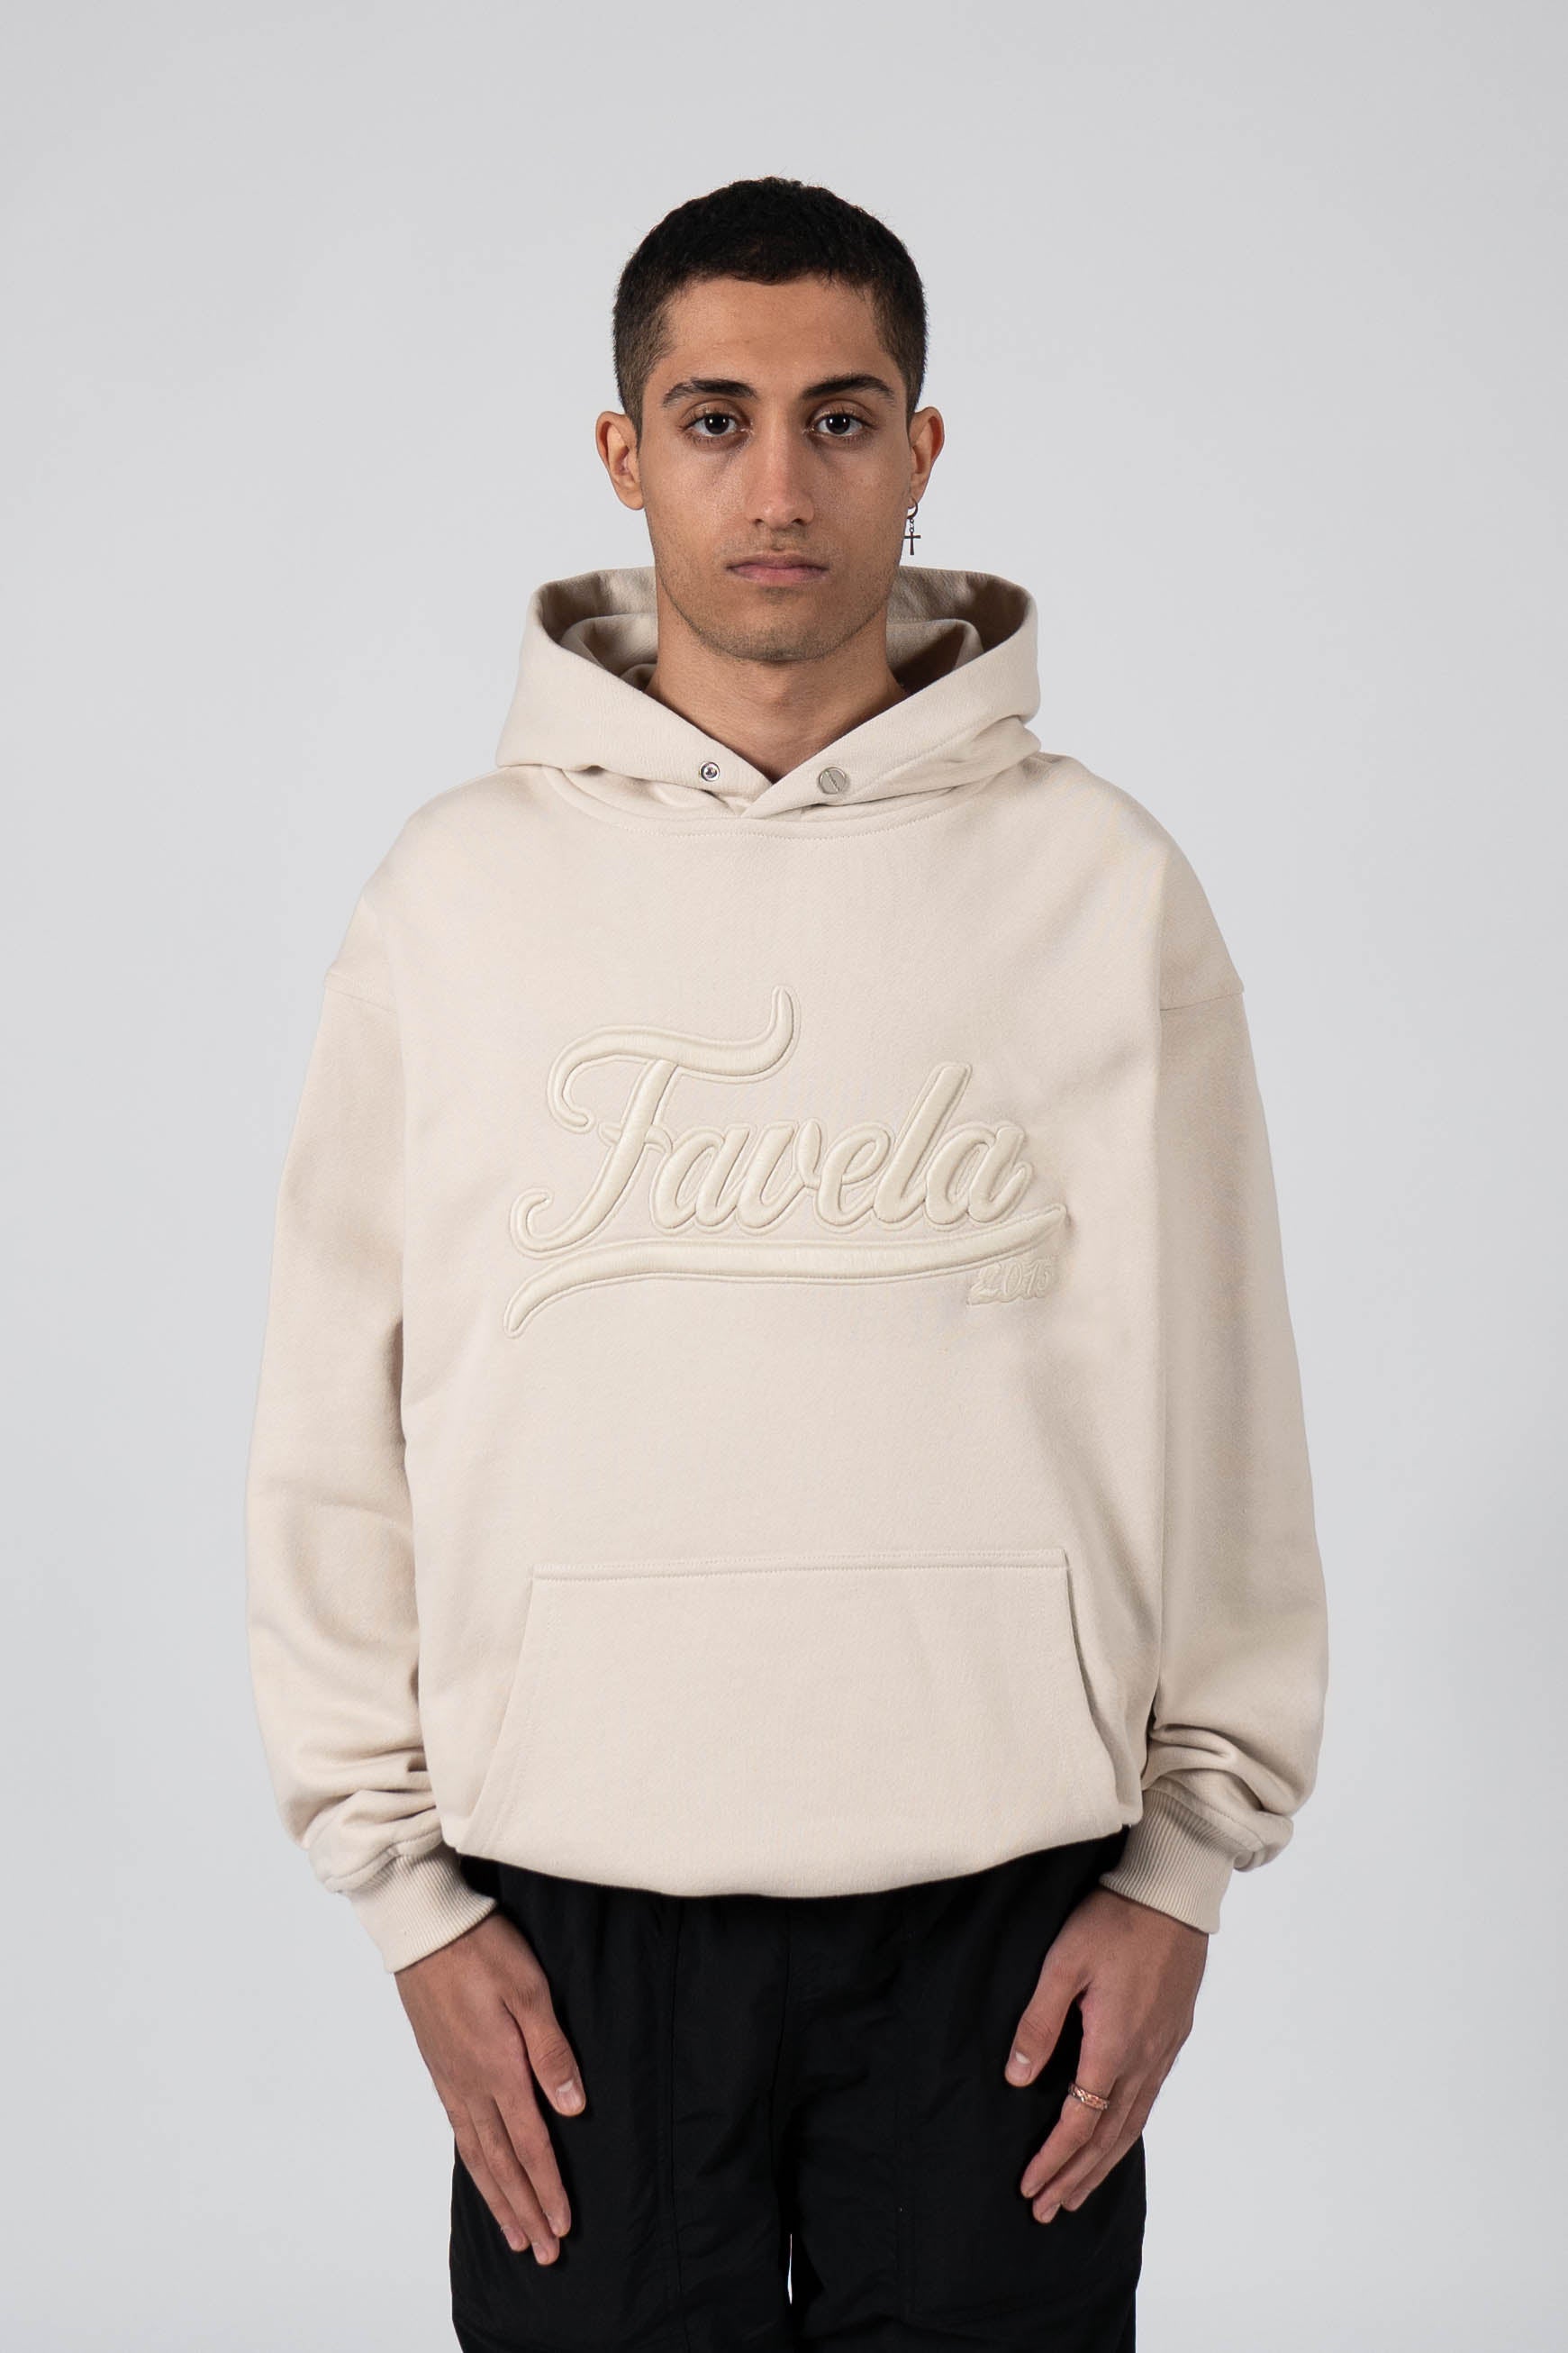 Favela Clothing Model trägt Hoodie